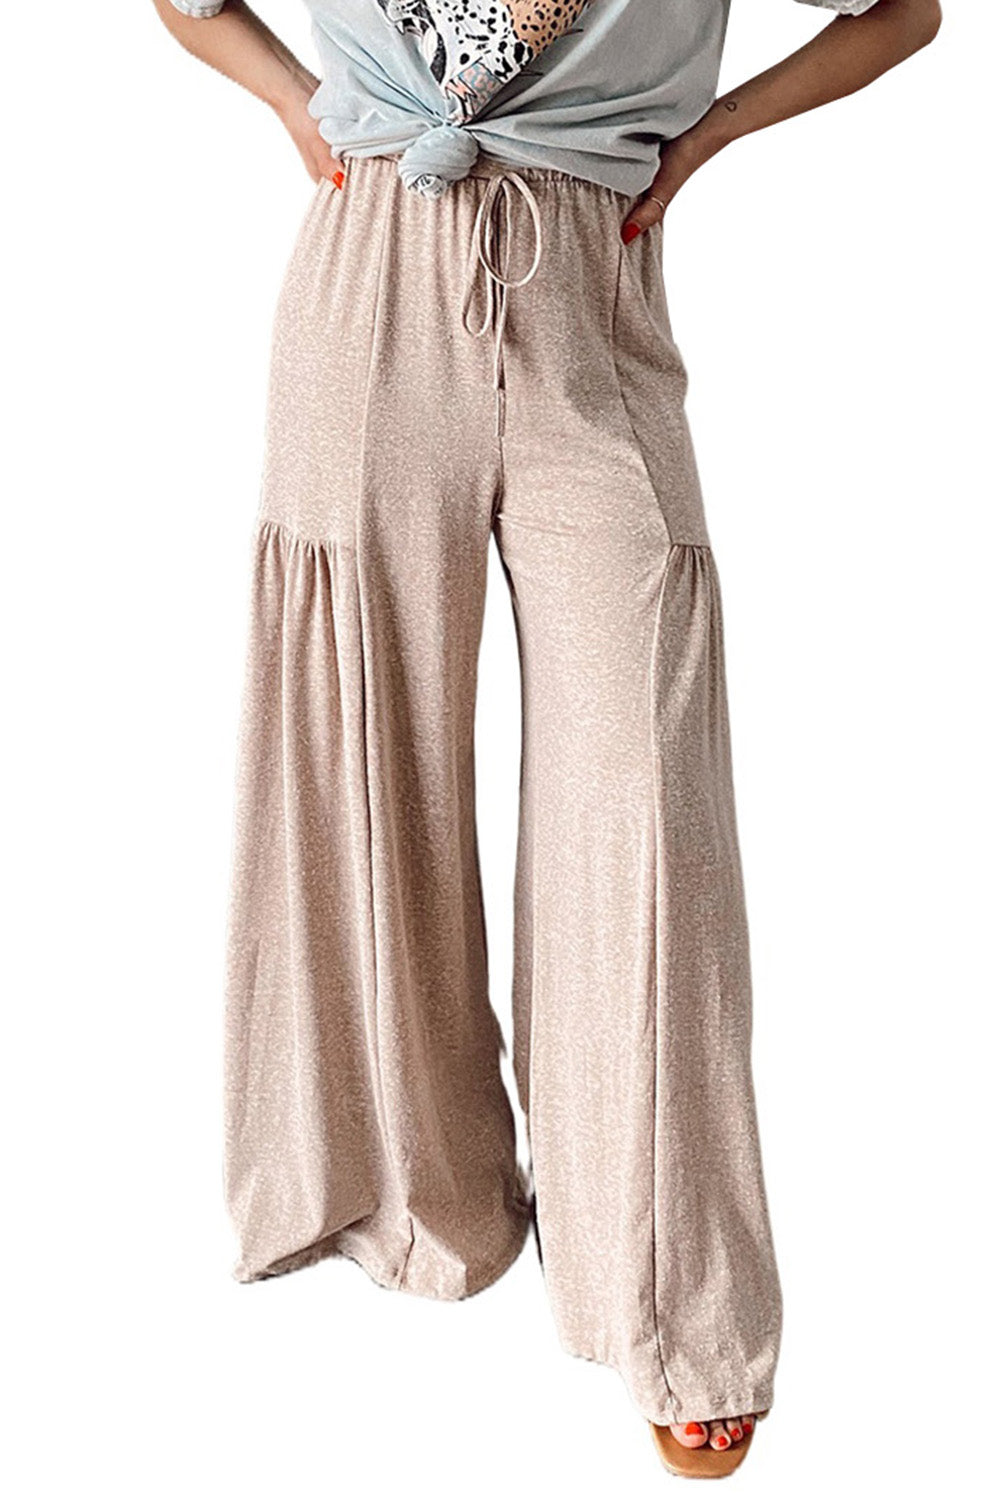 Khaki Drawstring Pleated Wide Leg Womens Pants - US2EInc Apparel Plug Ltd. Co